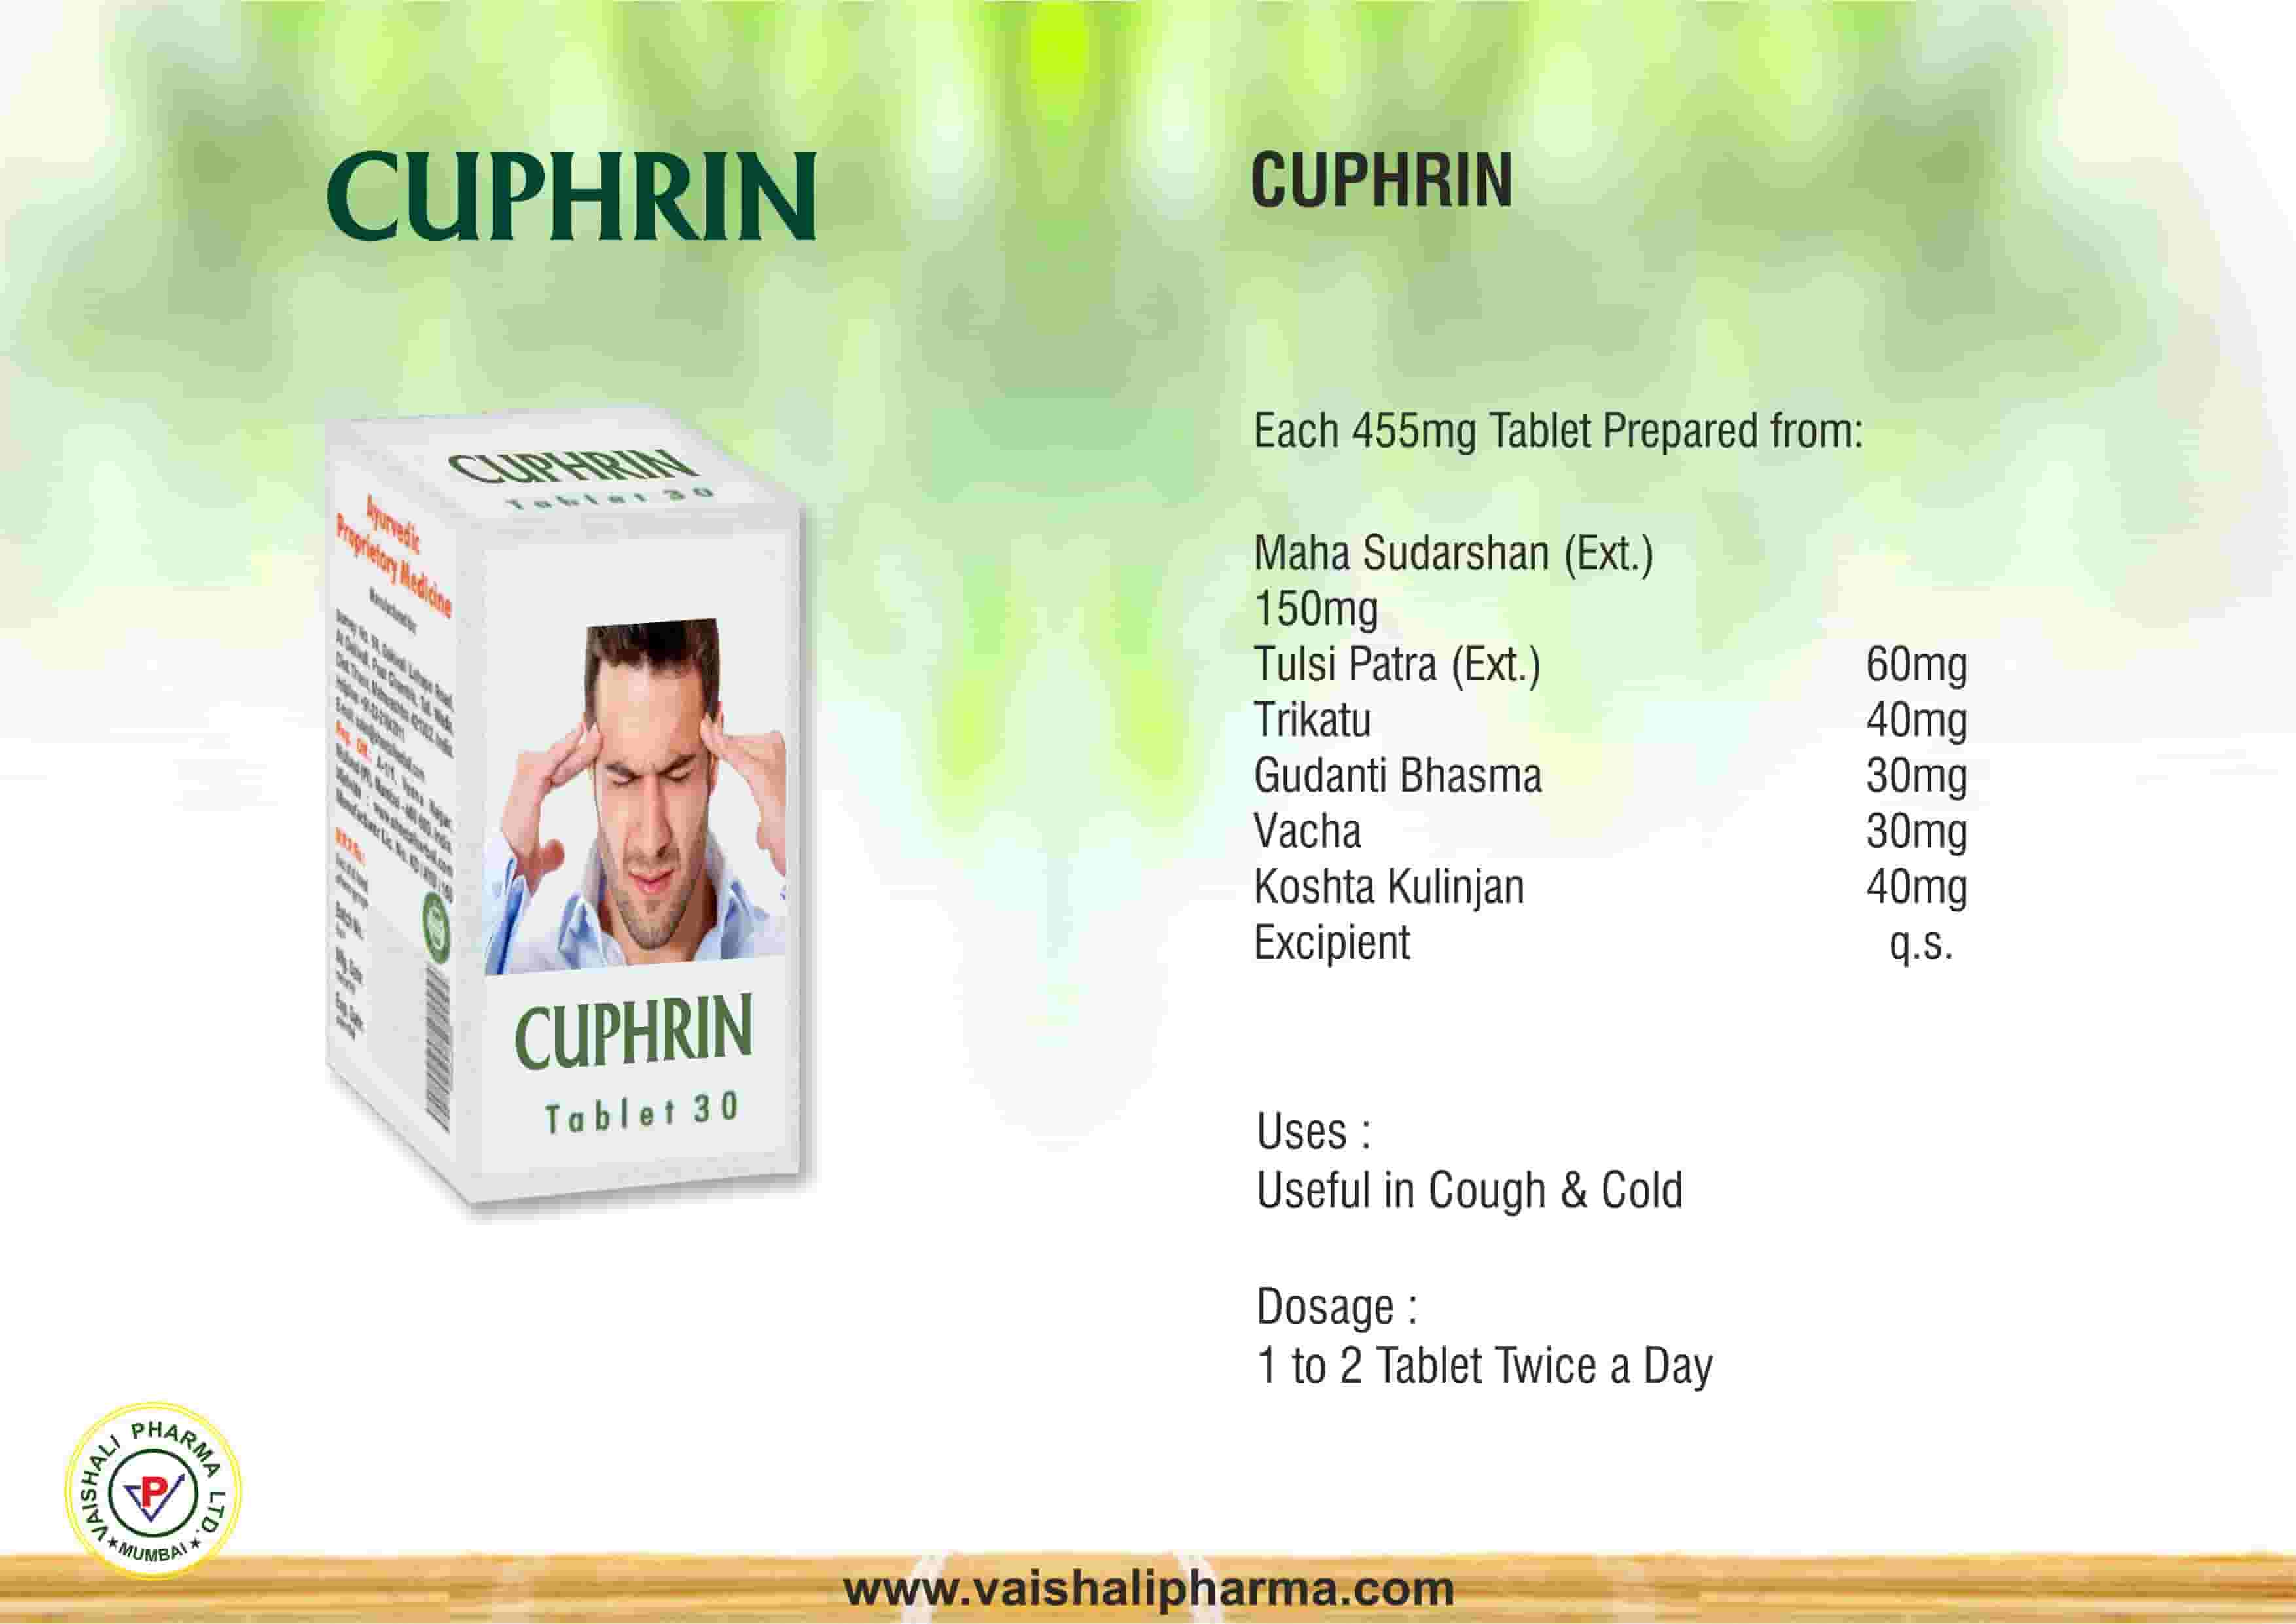 Cuphrin